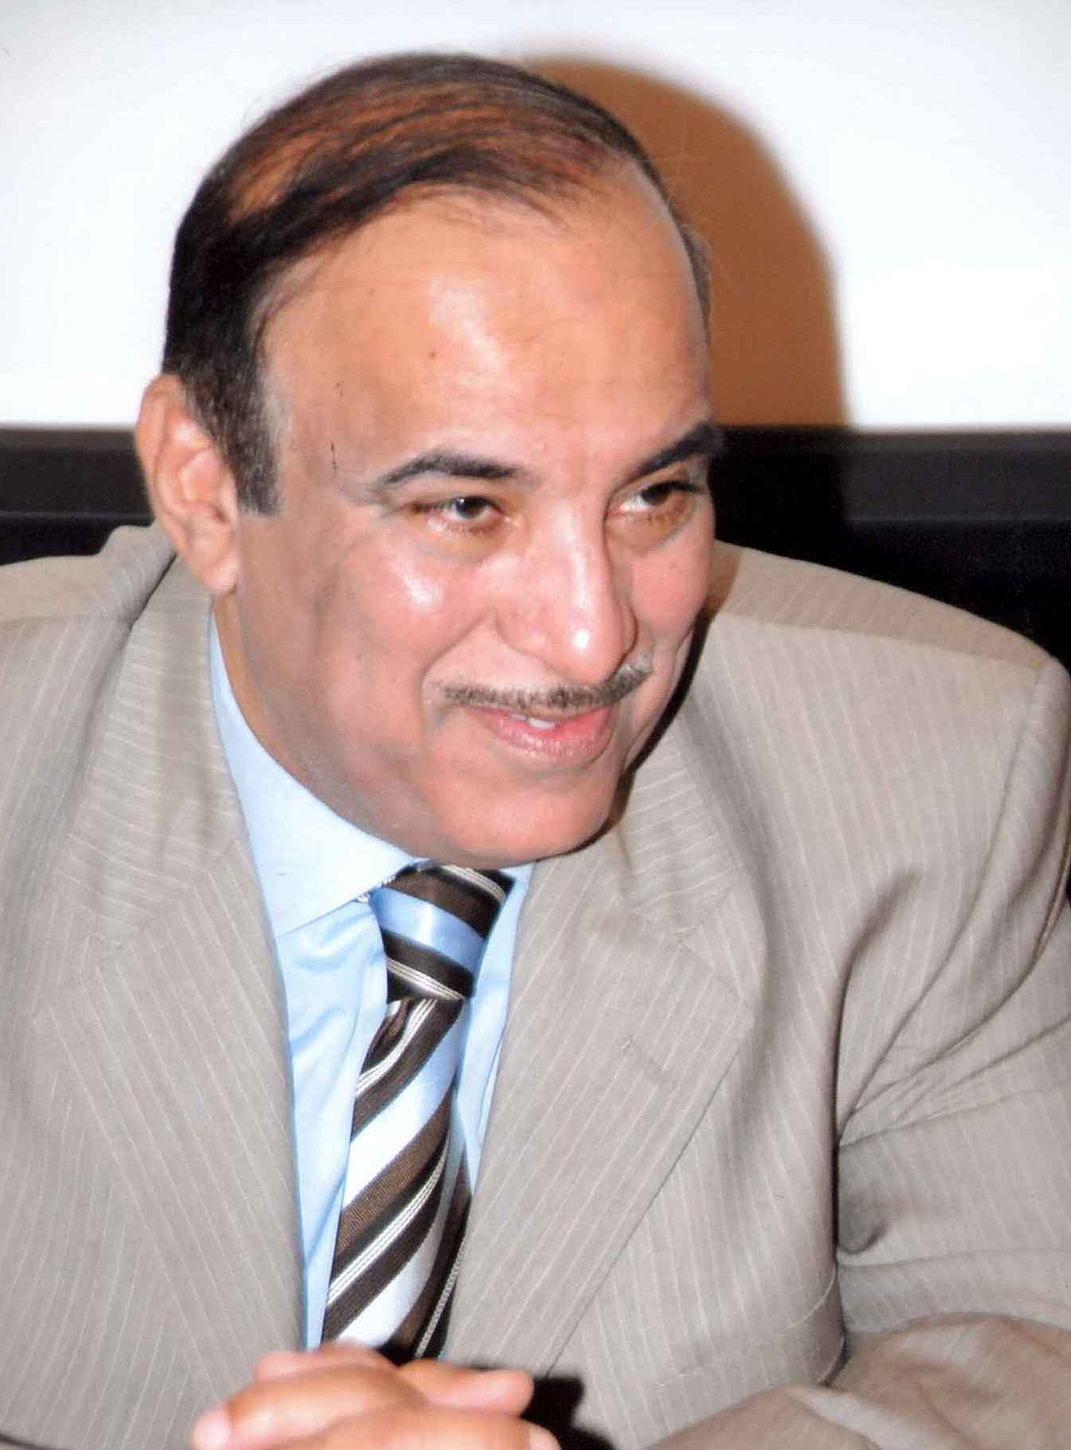 Kuwaiti Oncologist Dr. Khalid Ahmed Al-Saleh